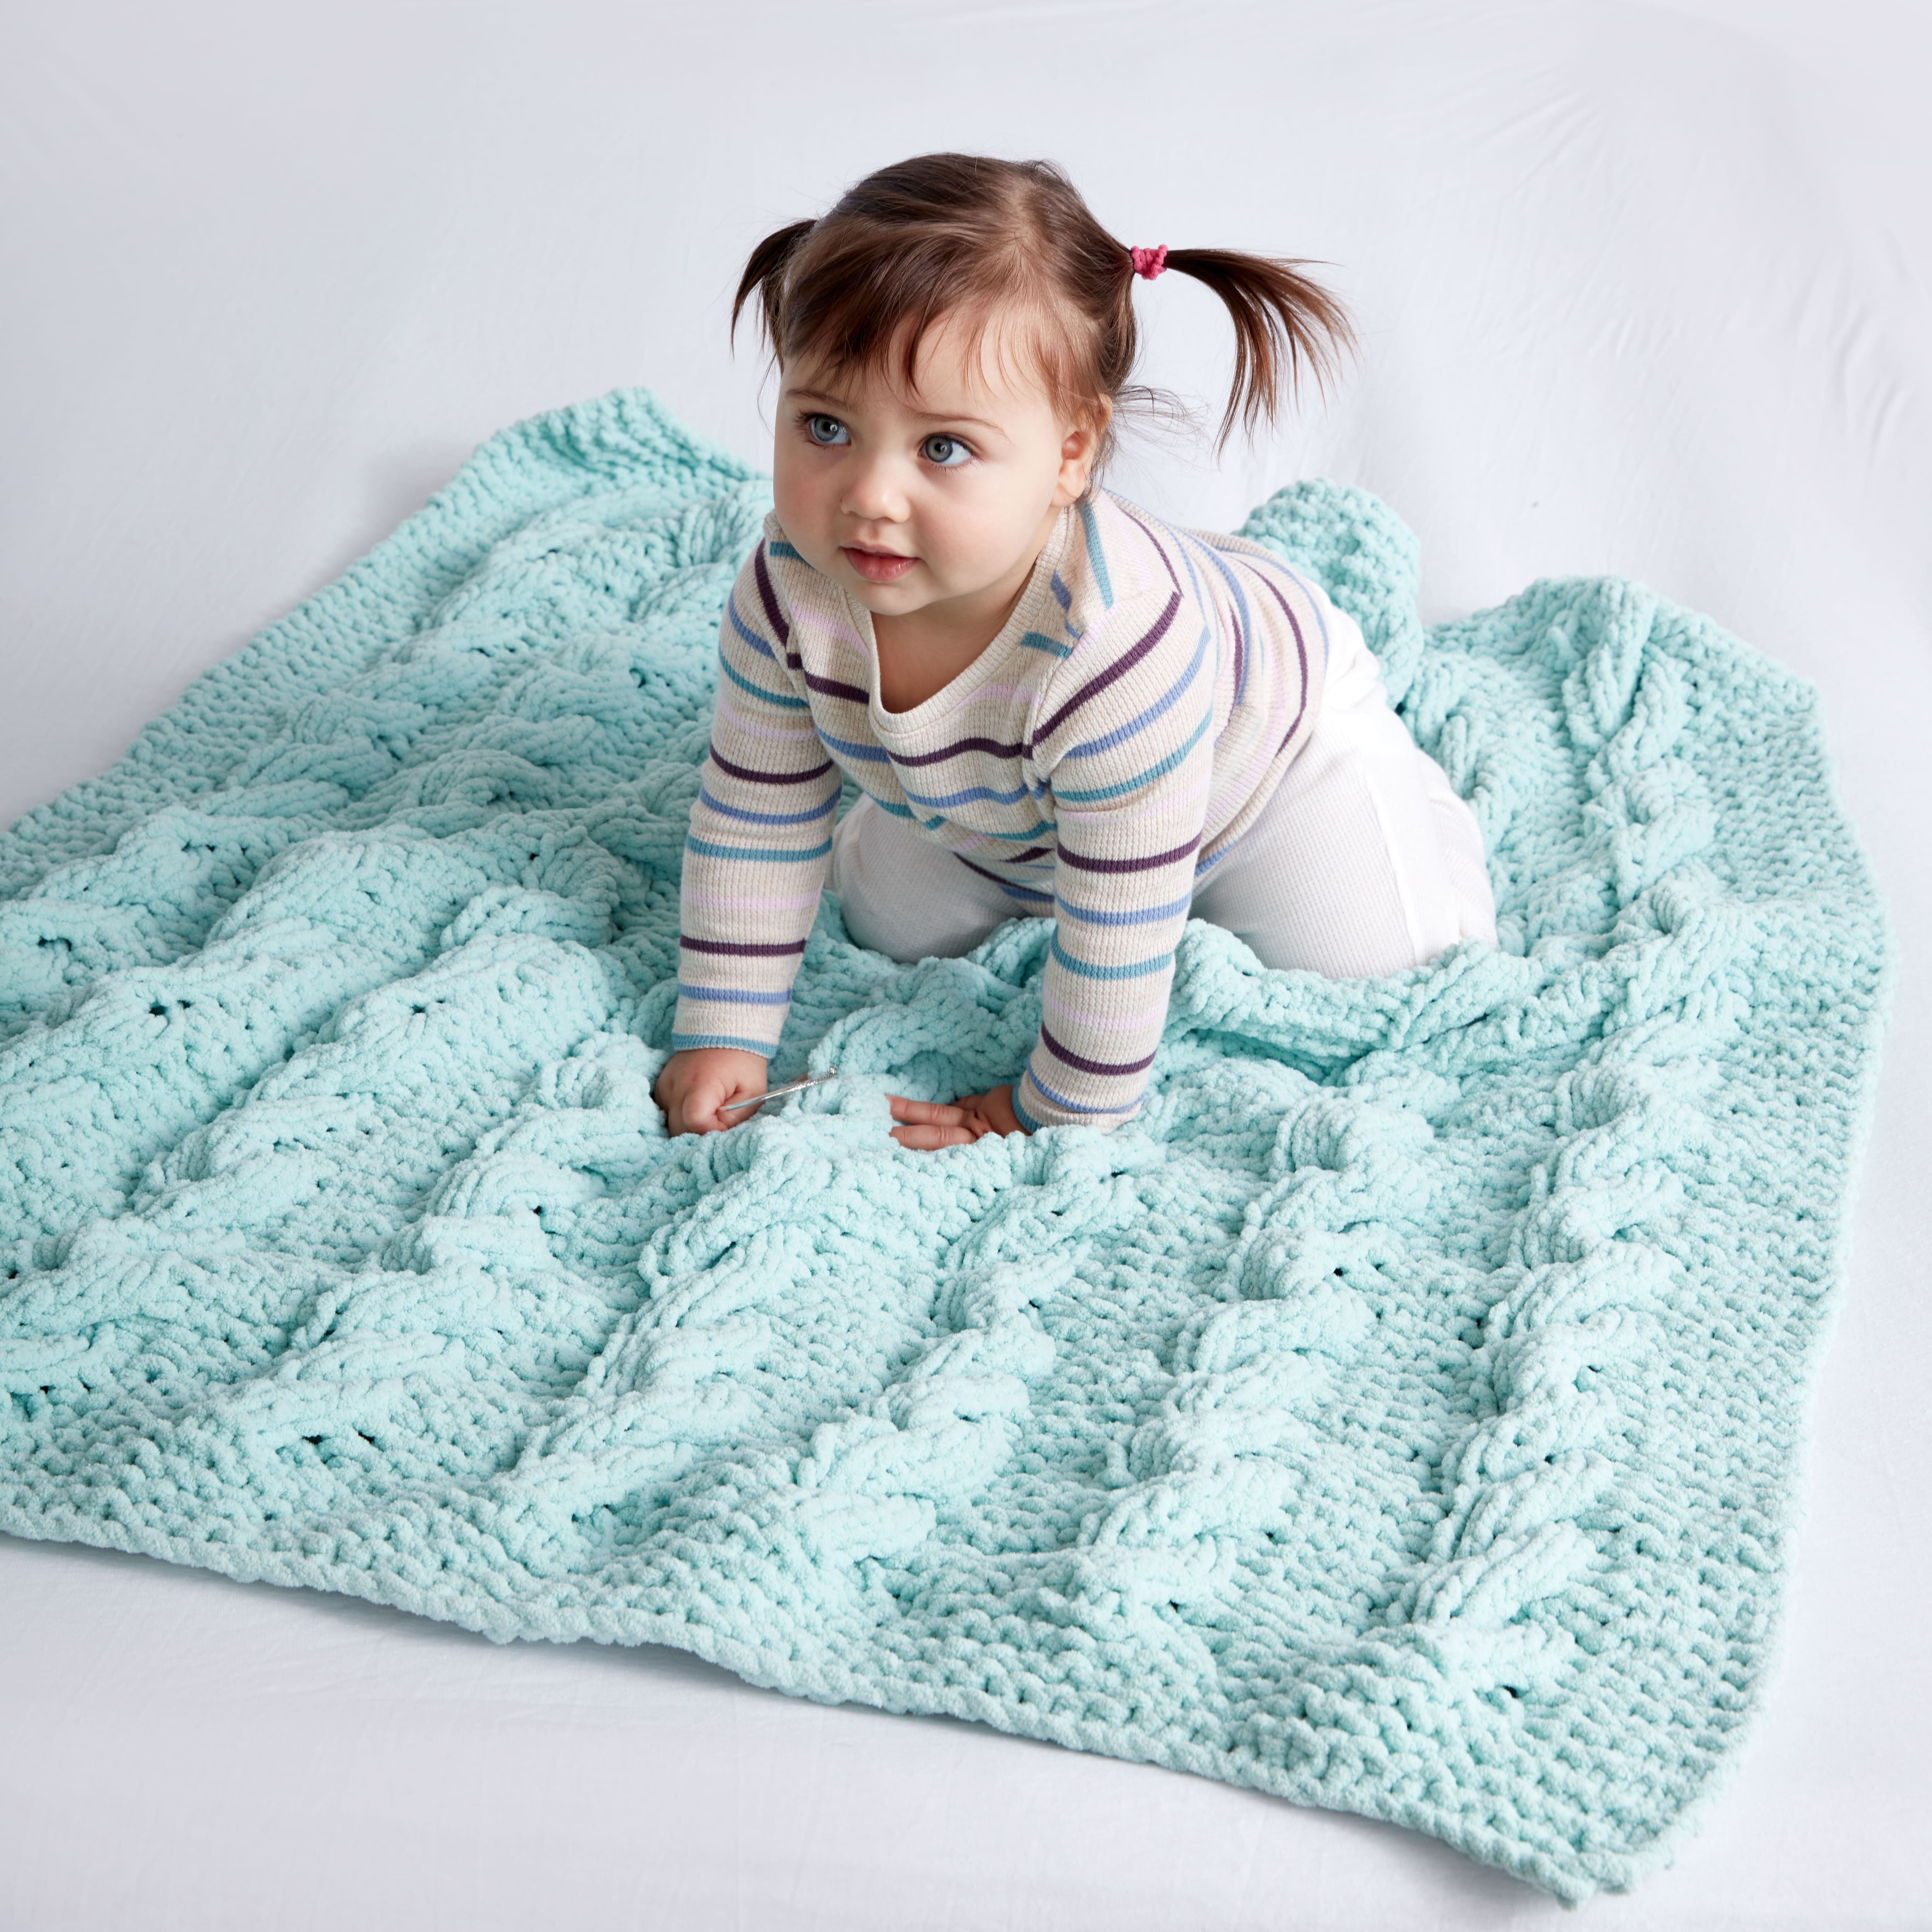 Bernat Baby Blanket Dappled Yarn by Bernat